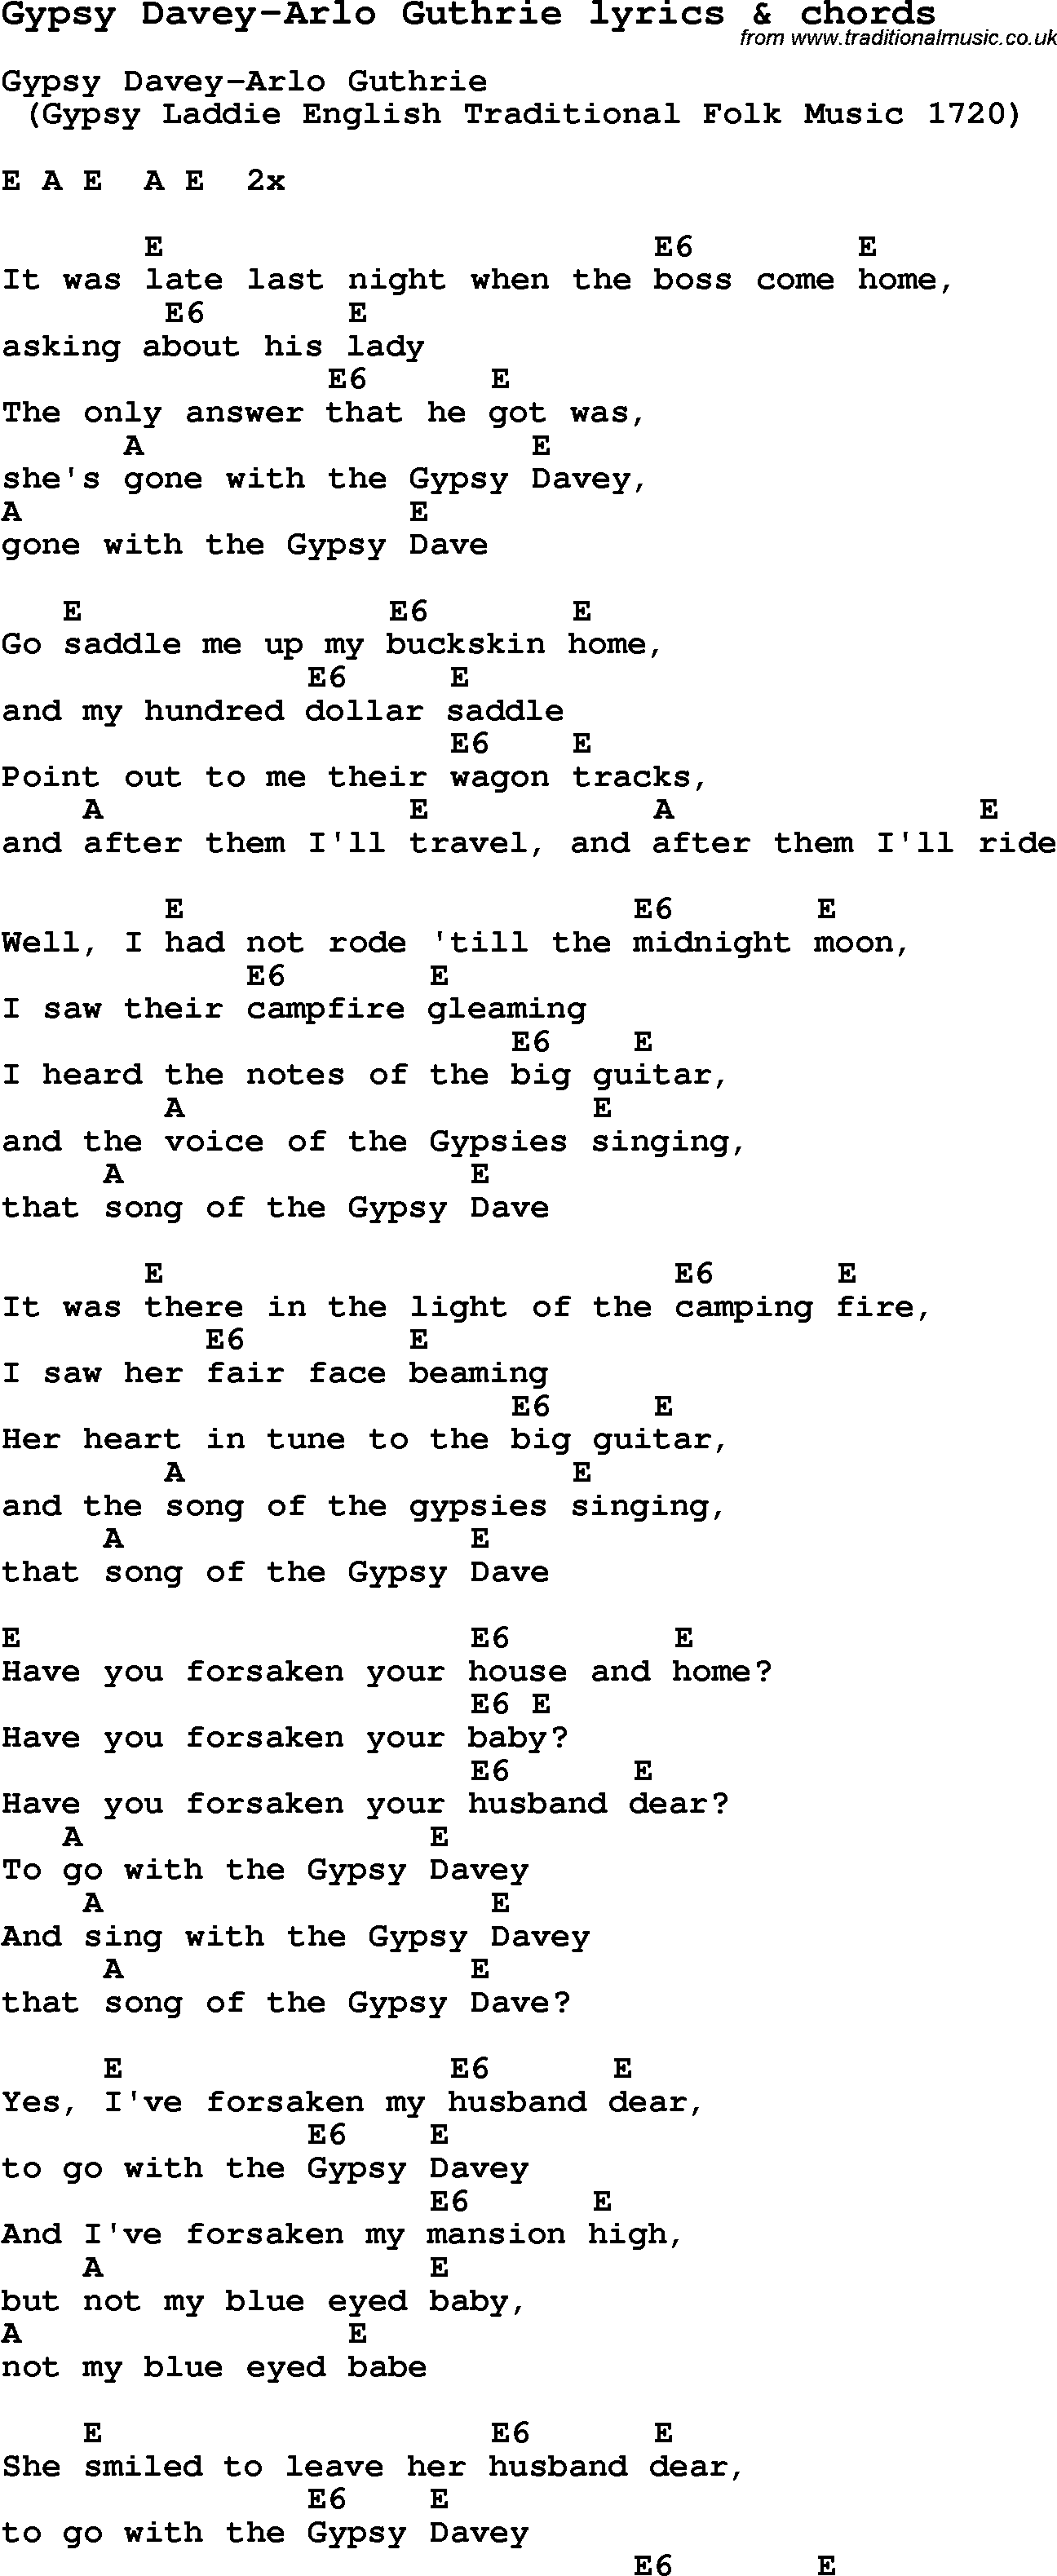 Love Song Lyrics for: Gypsy Davey-Arlo Guthrie with chords for Ukulele, Guitar Banjo etc.